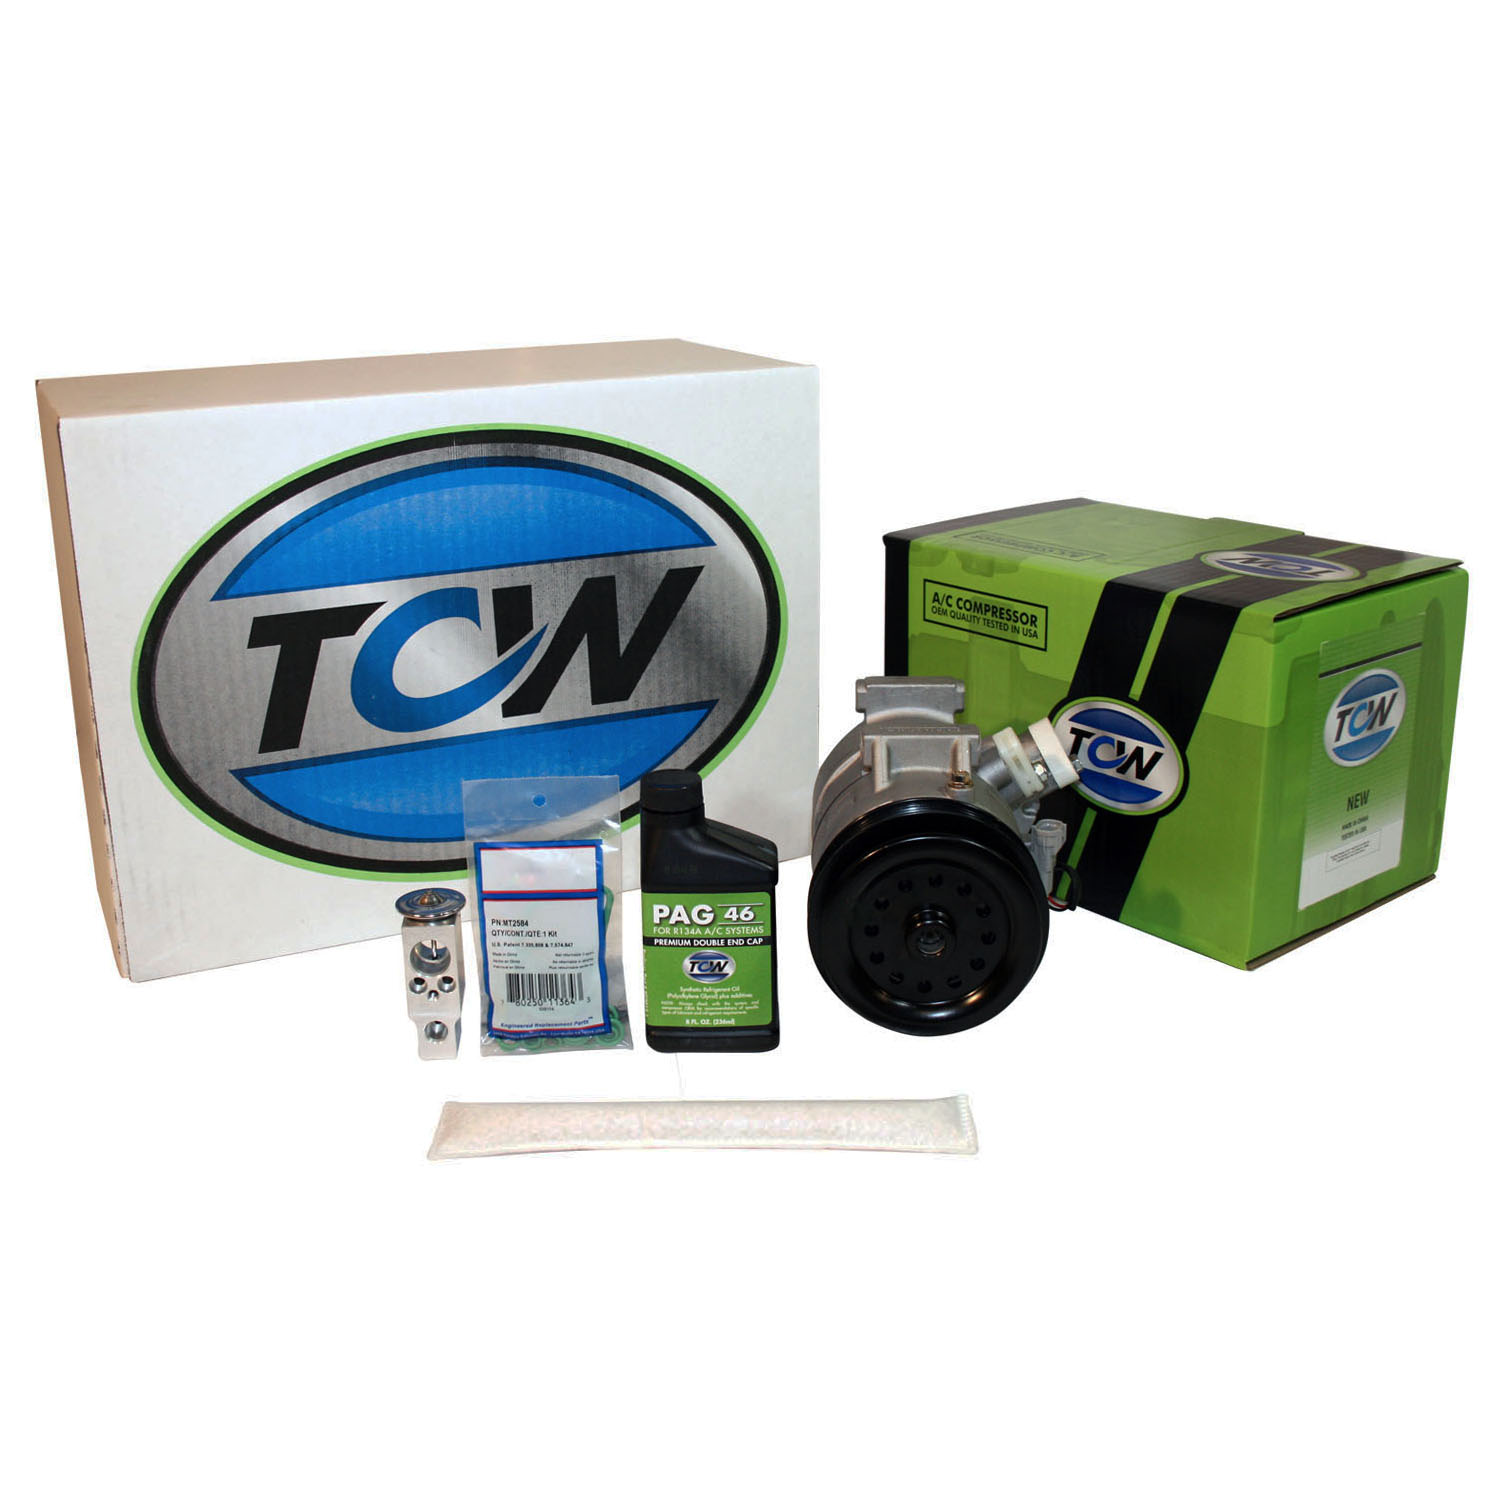 TCW Vehicle A/C Kit K1000410N New Product Image field_60b6a13a6e67c